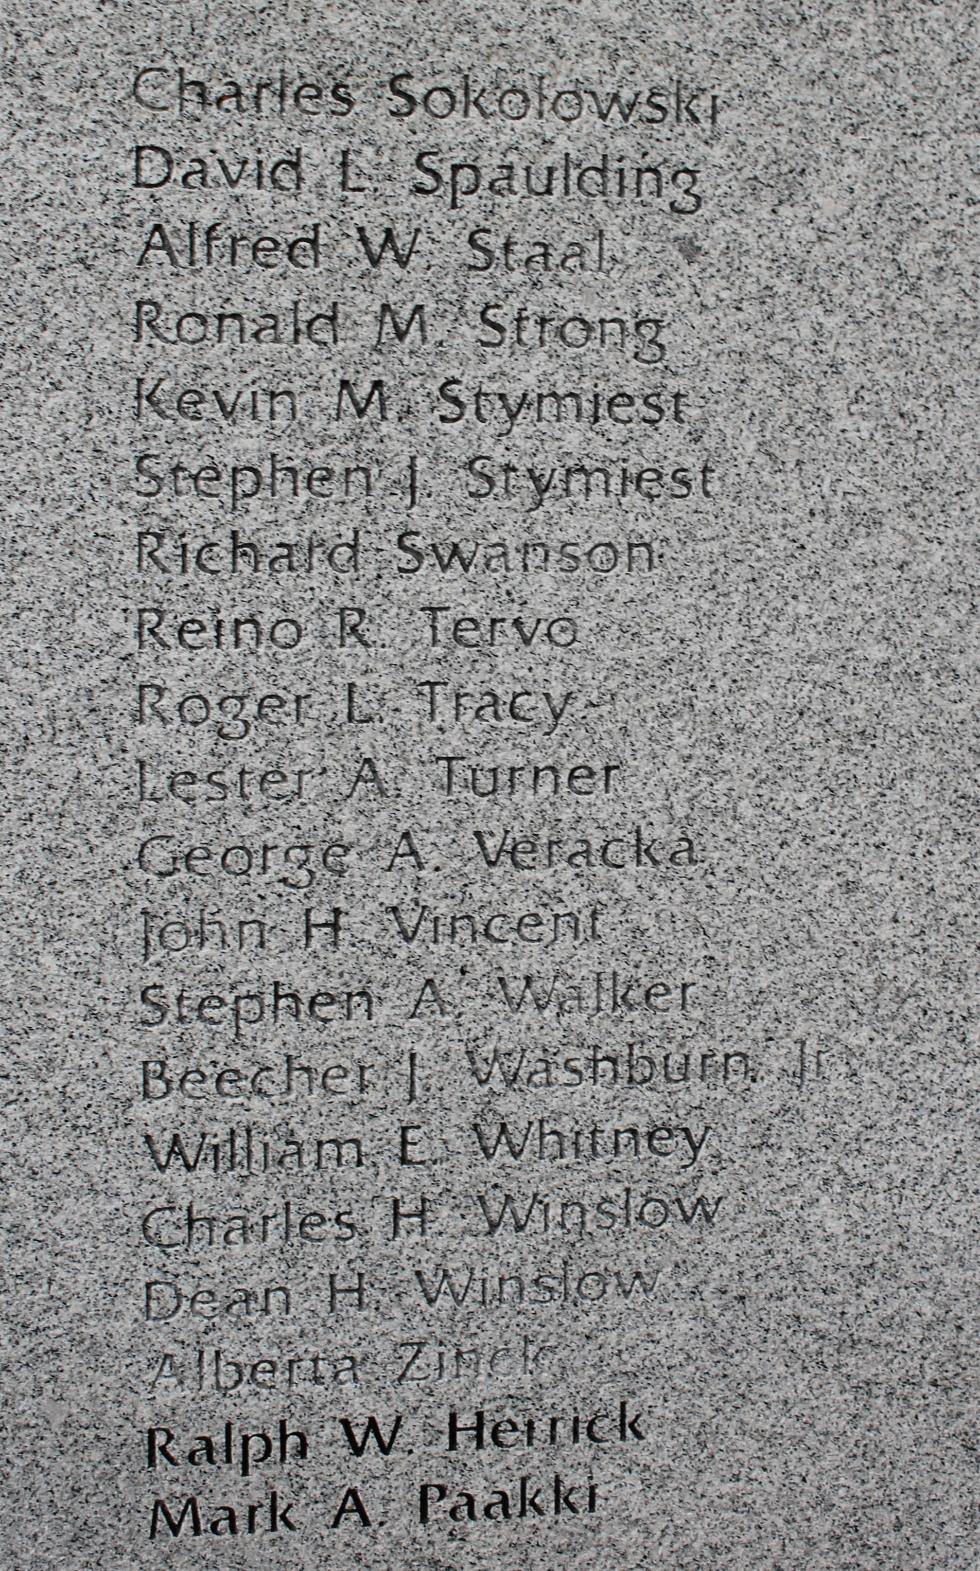 Stowe Massachusetts Vietnam War Veterans Memorial